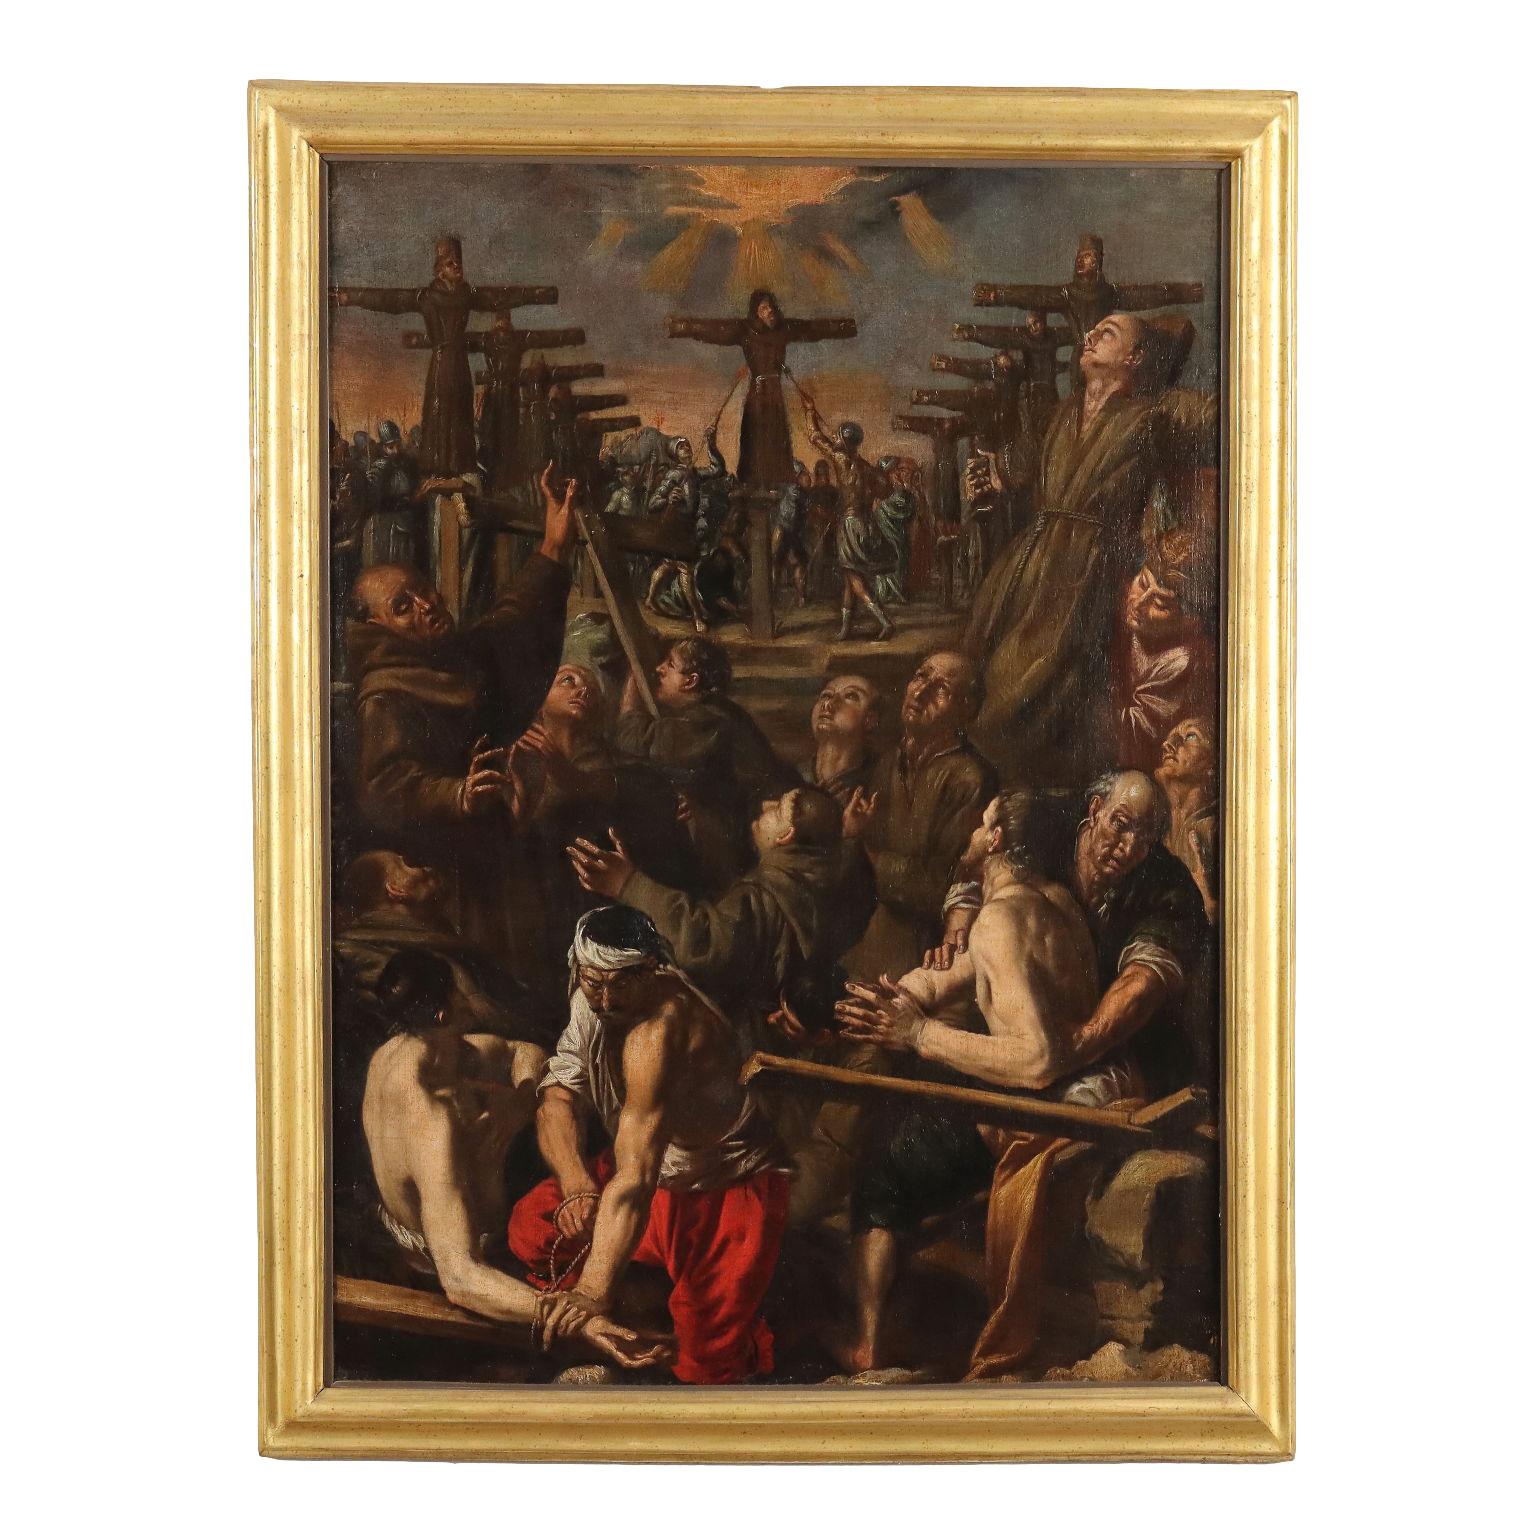 Tanzio da Varallo (Alagna Valsesia, c. 1582 - Varallo, 1633) Figurative Painting – Martyrium der Franziskaner in Nagasaki